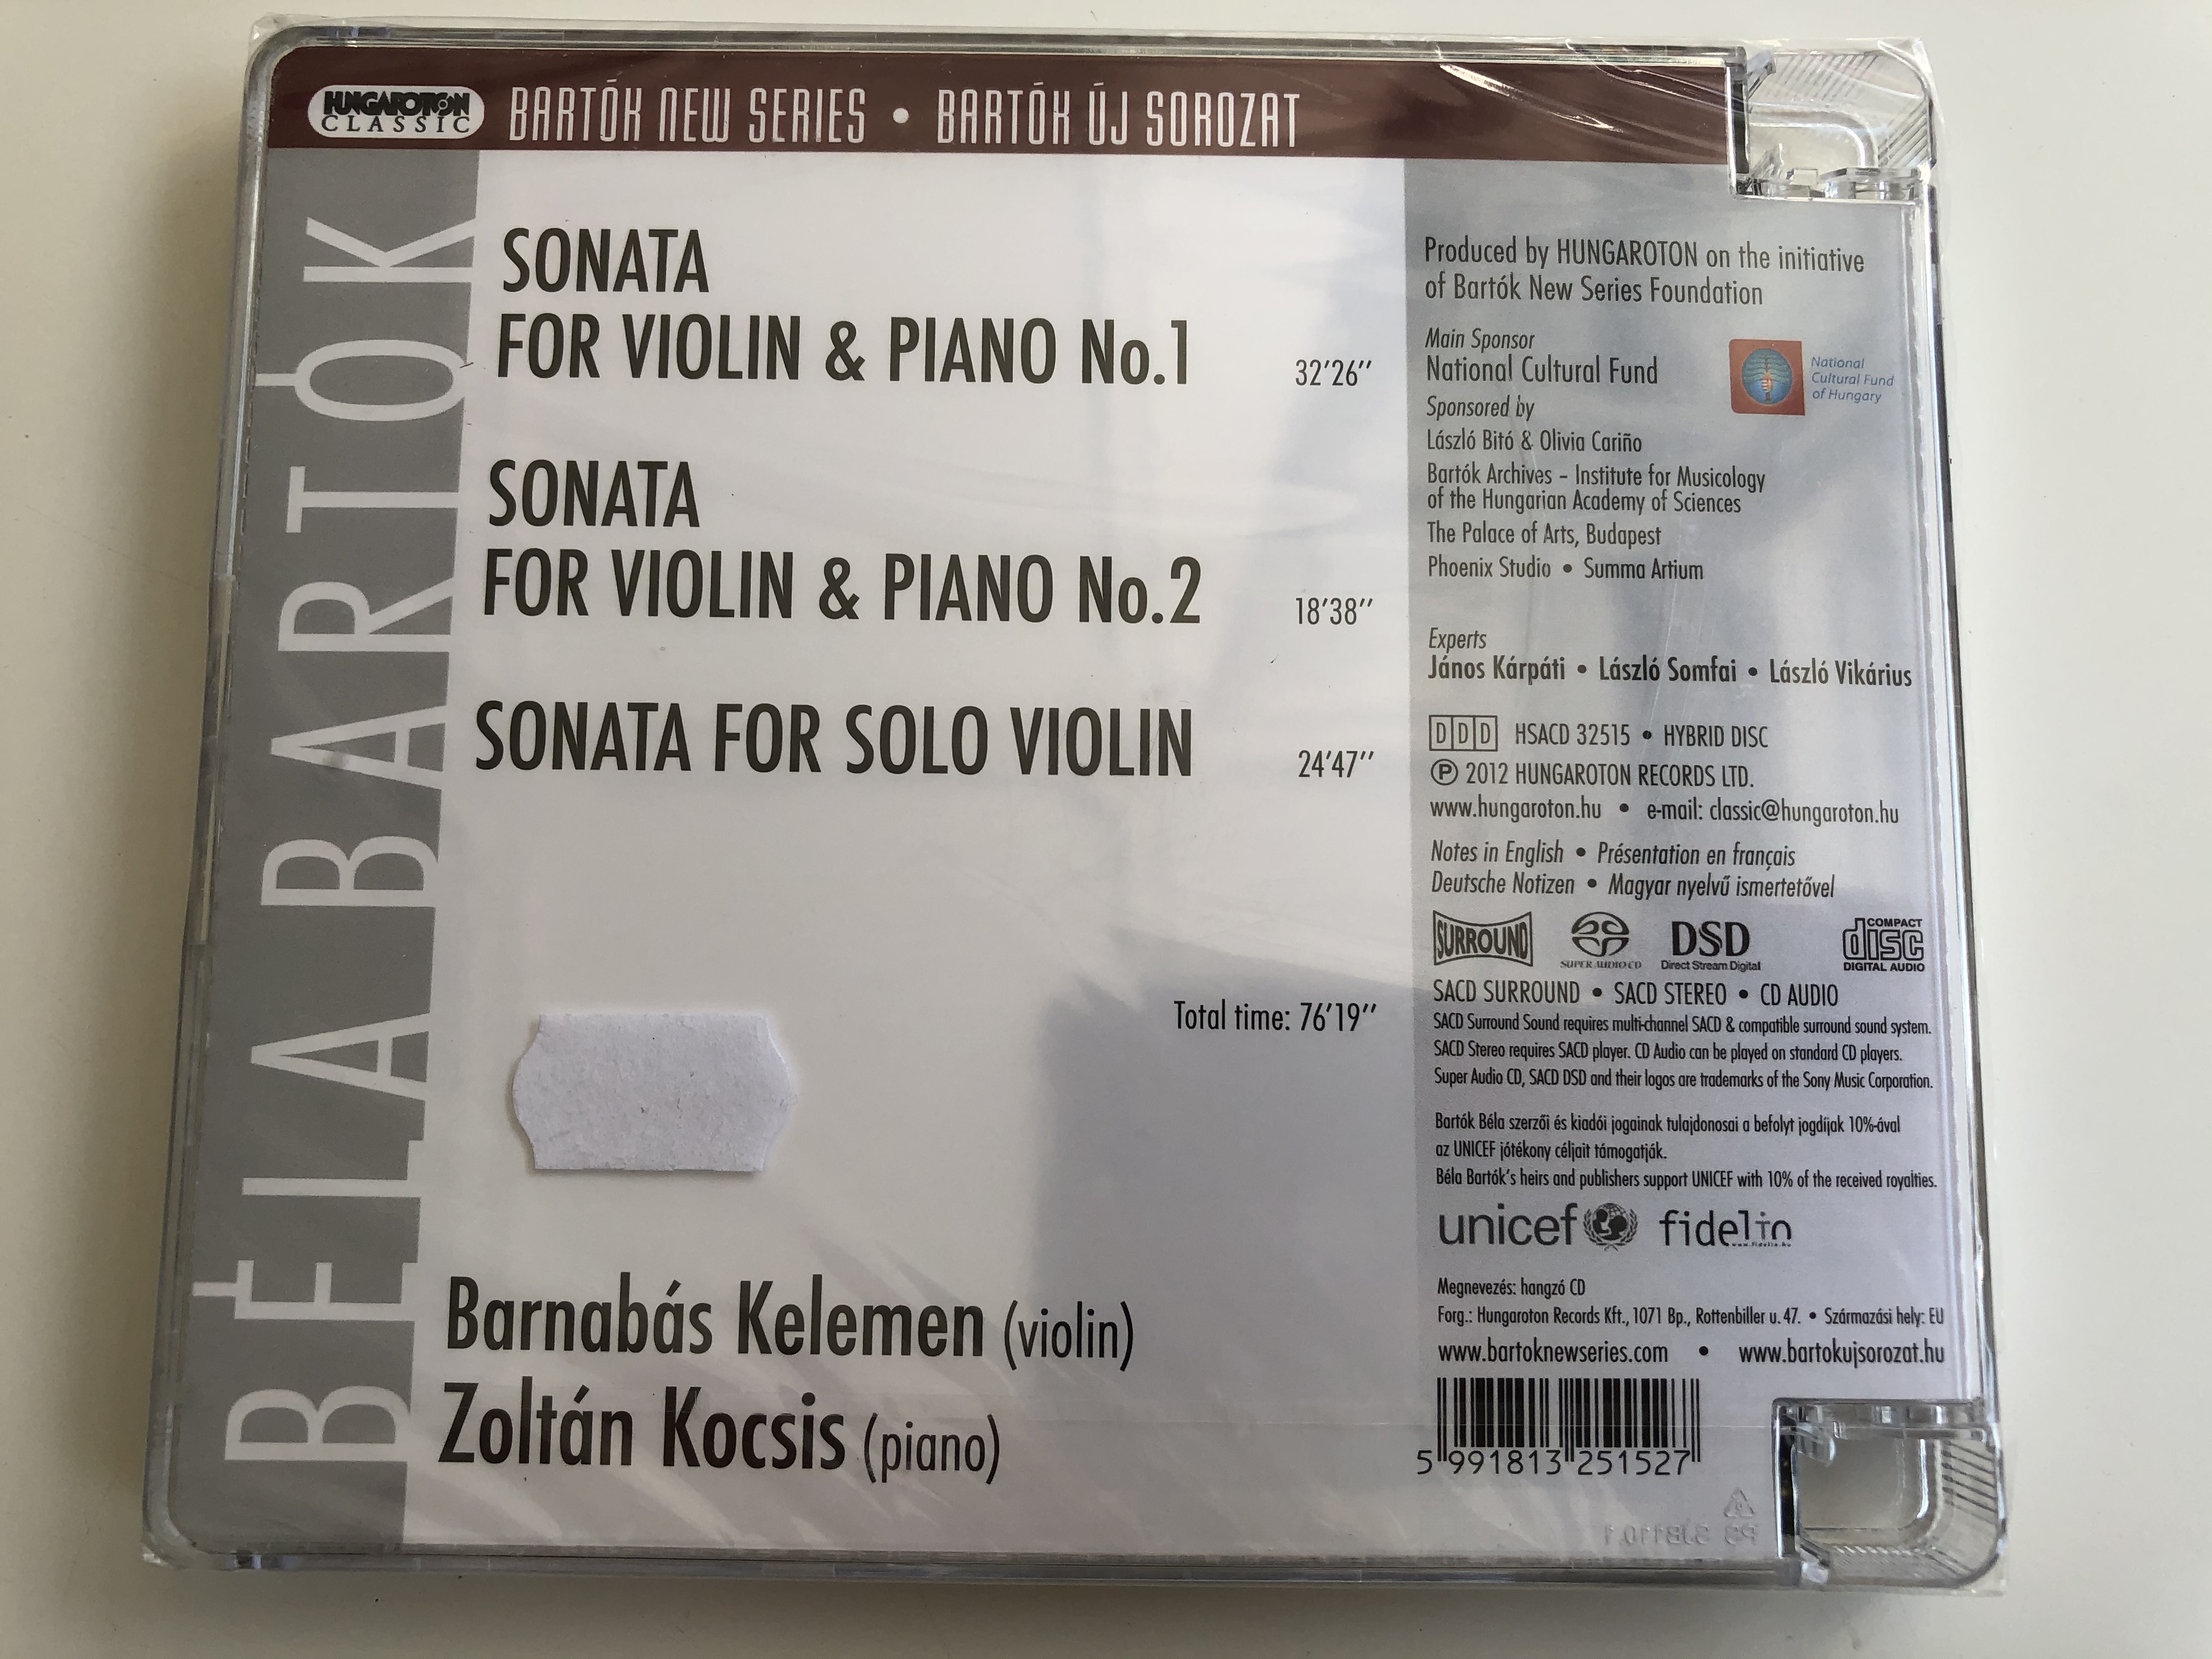 bela-bart-k-sonatas-for-violin-piano-nos-1-2-sonata-for-solo-violin-barnab-s-kelemen-violin-zolt-n-kocsis-piano-bart-k-new-series-hungaroton-classic-hybrid-disc-2012-hsacd-32515-1.jpg